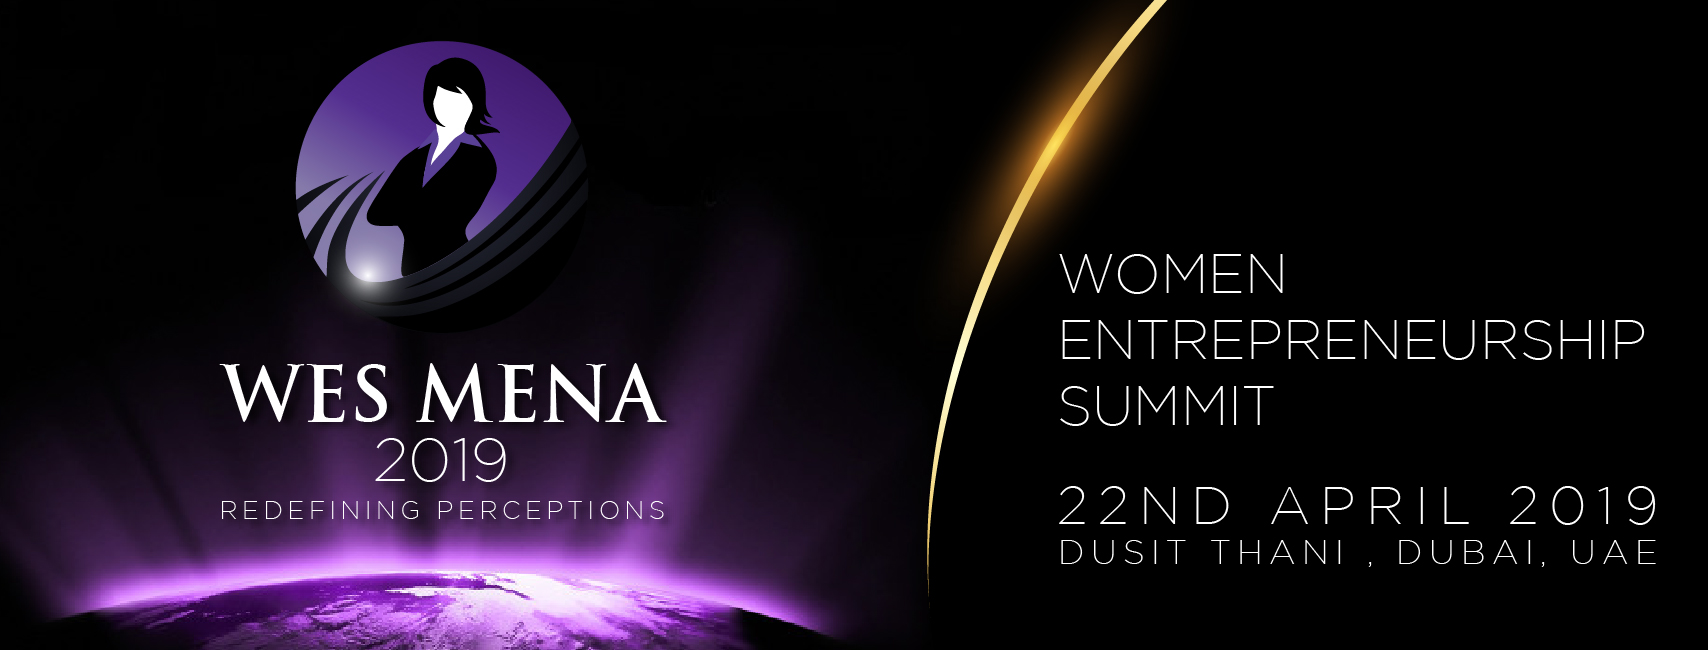 WES MENA 2019 - Women Entrepreneurship Summit MENA, Dubai, United Arab Emirates